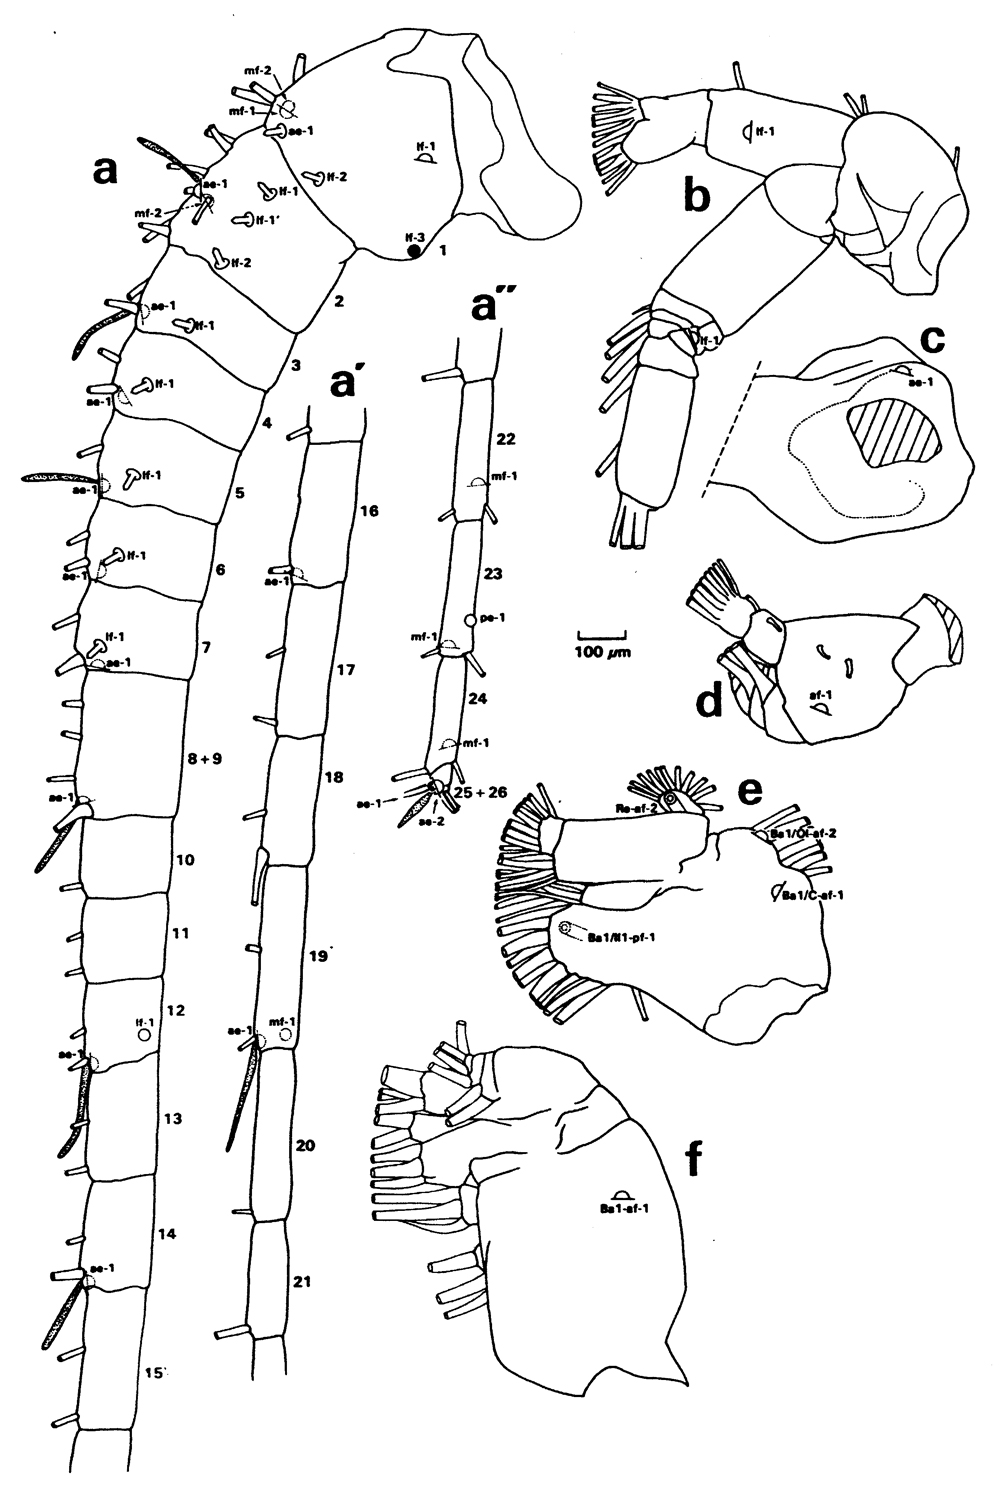 Species Pseudochirella obesa - Plate 12 of morphological figures